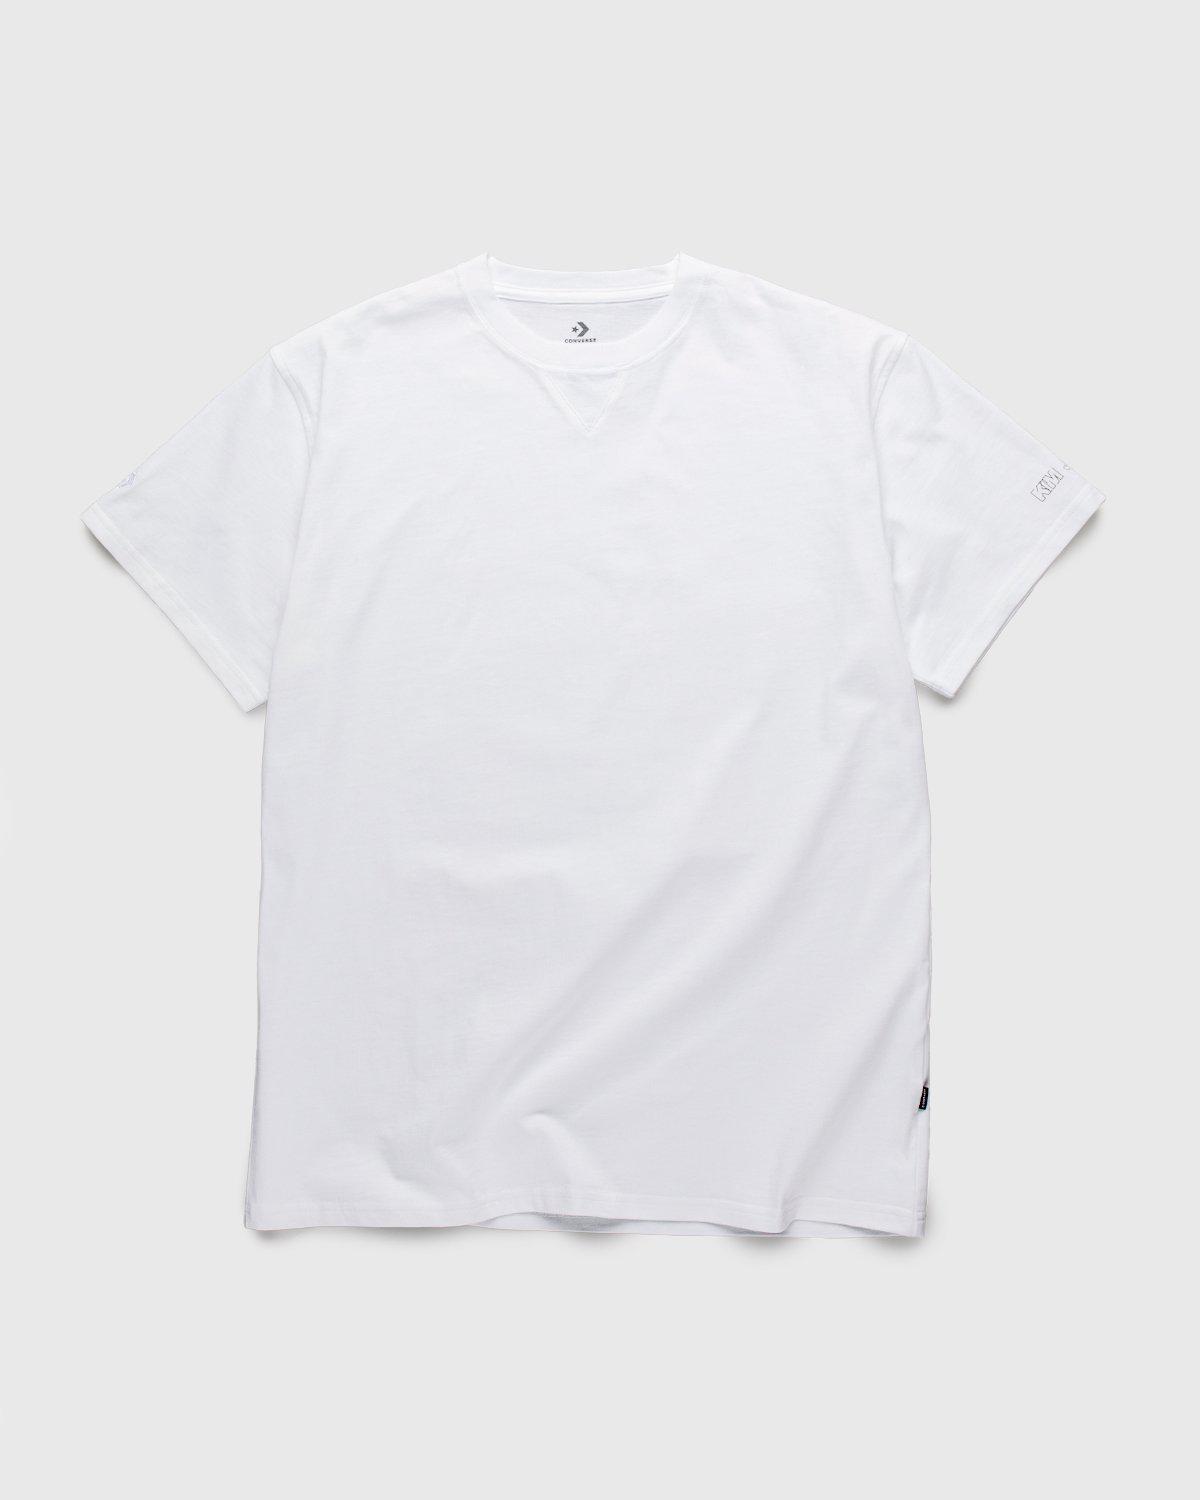 Converse x Kim Jones – T-Shirt White by CONVERSE X KIM JONES